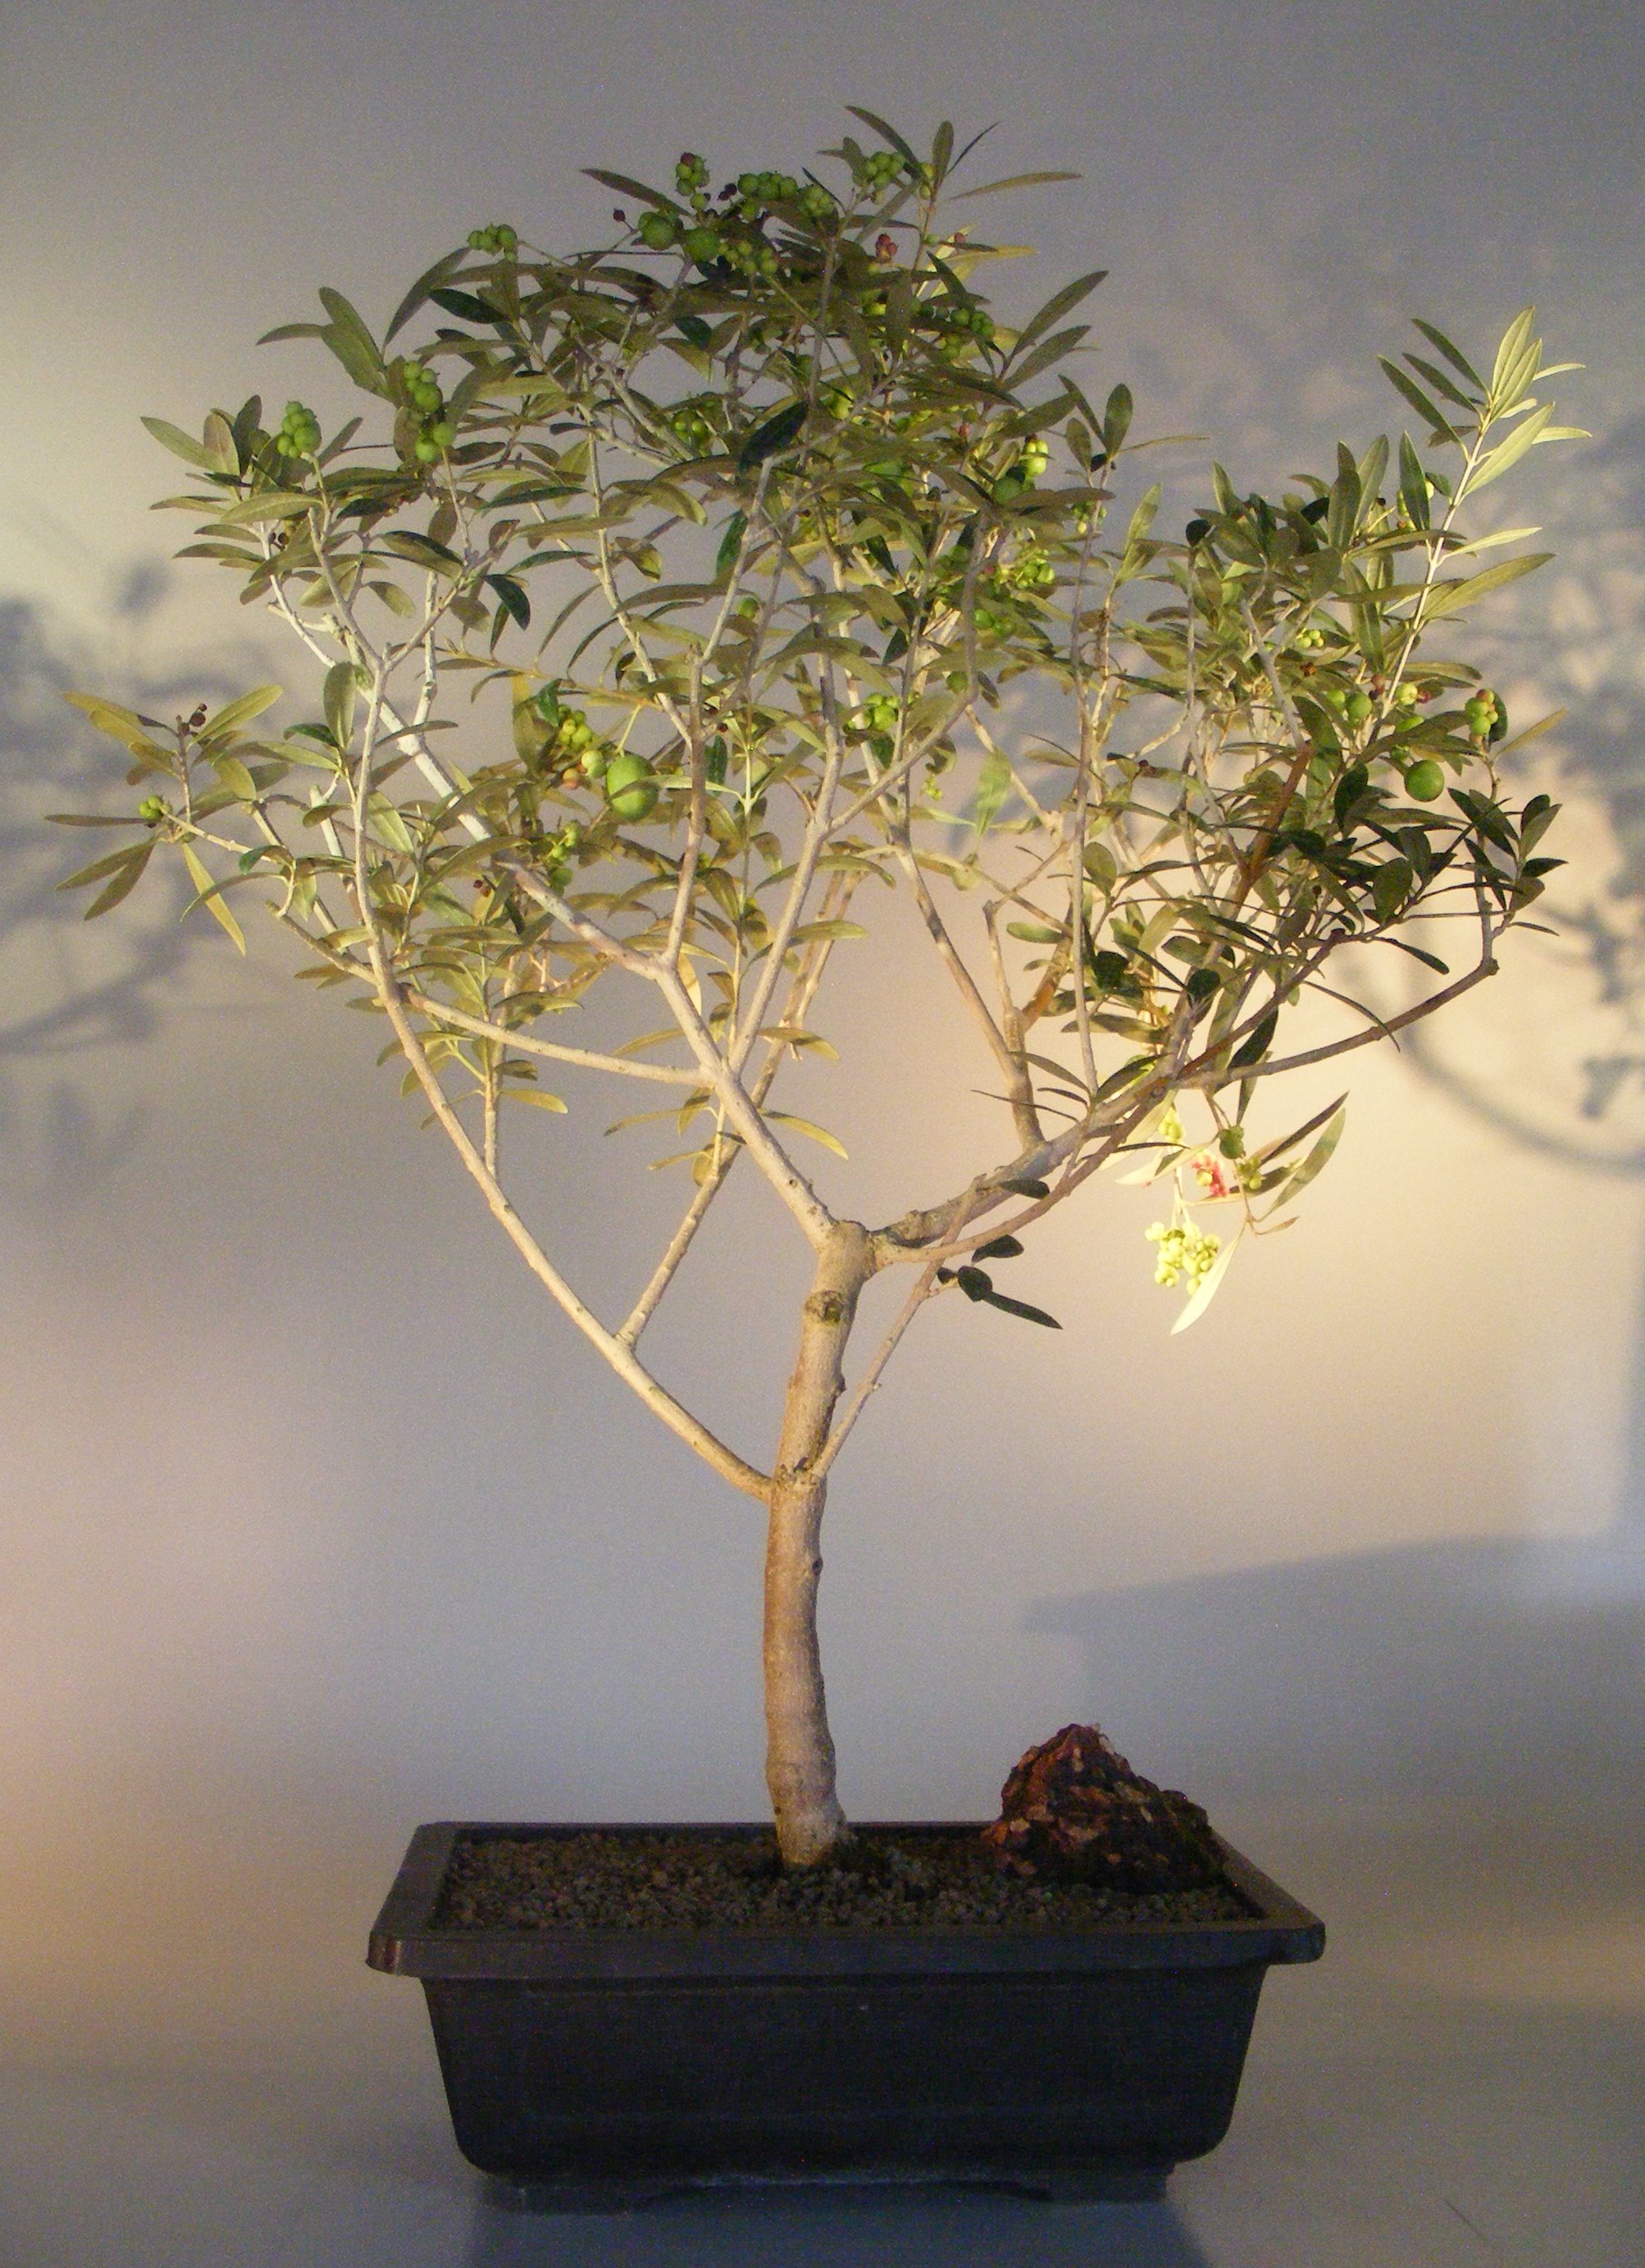 Flowering &amp; Fruiting European Olive Bonsai Tree&lt;br&gt;&lt;i&gt;(olea europaea little ollie)&lt;/i&gt;